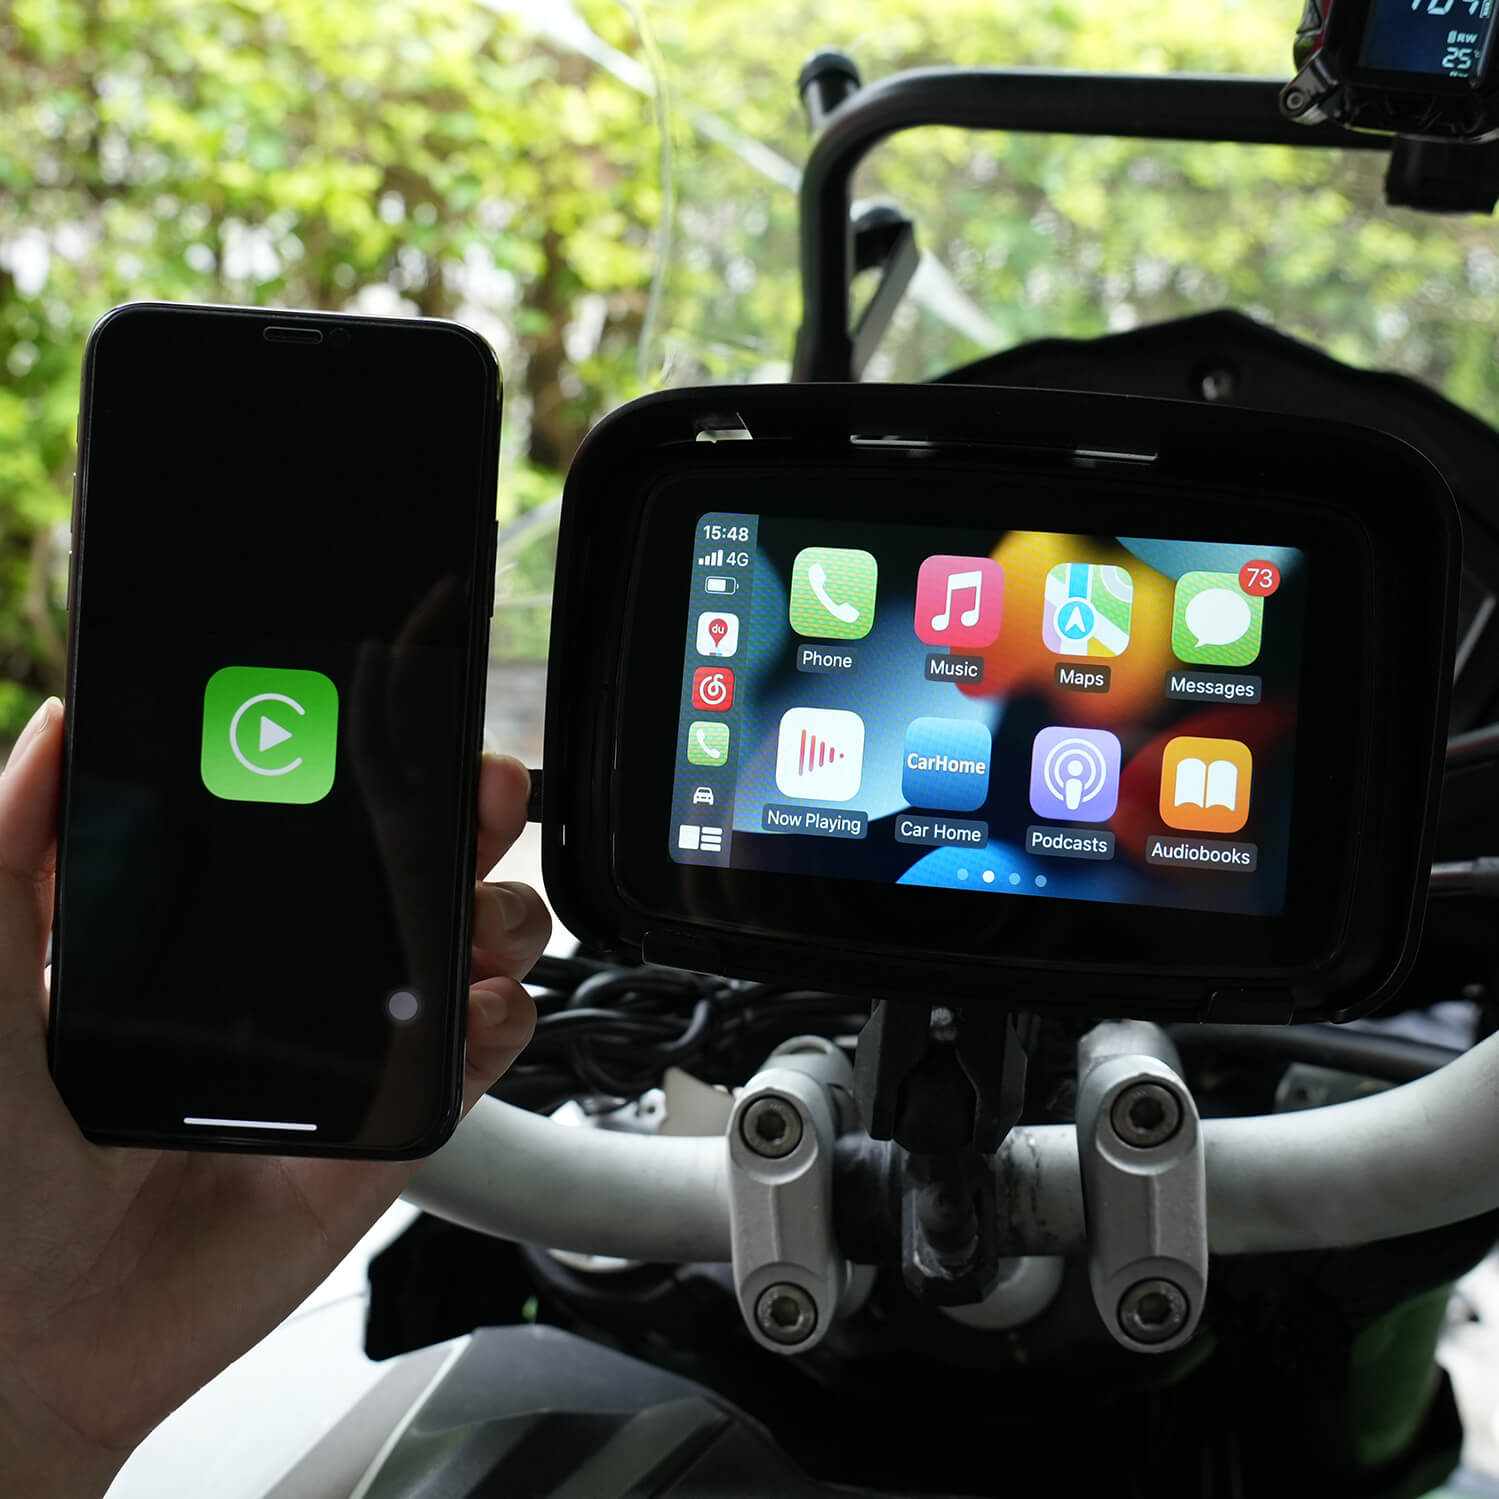 C5 Motorcycle CarPlay & Android Auto, USB media Standalone Navigator S –  Aoocci